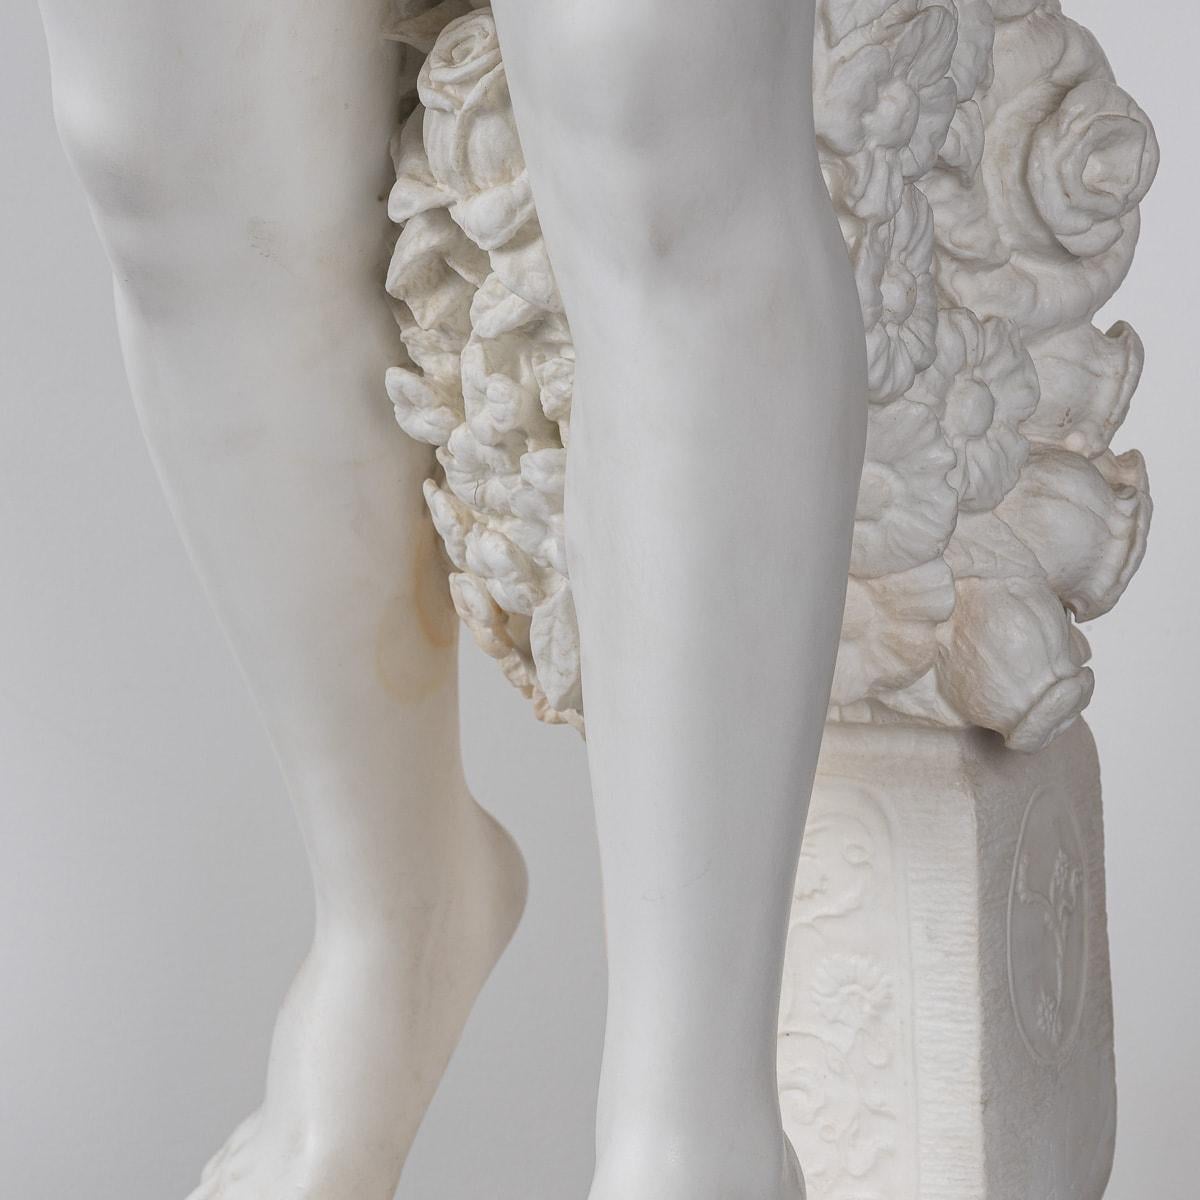 19th Century Italian Marble Figure Of A Nude, Adolfo Cipriani (1880-1930) For Sale 9